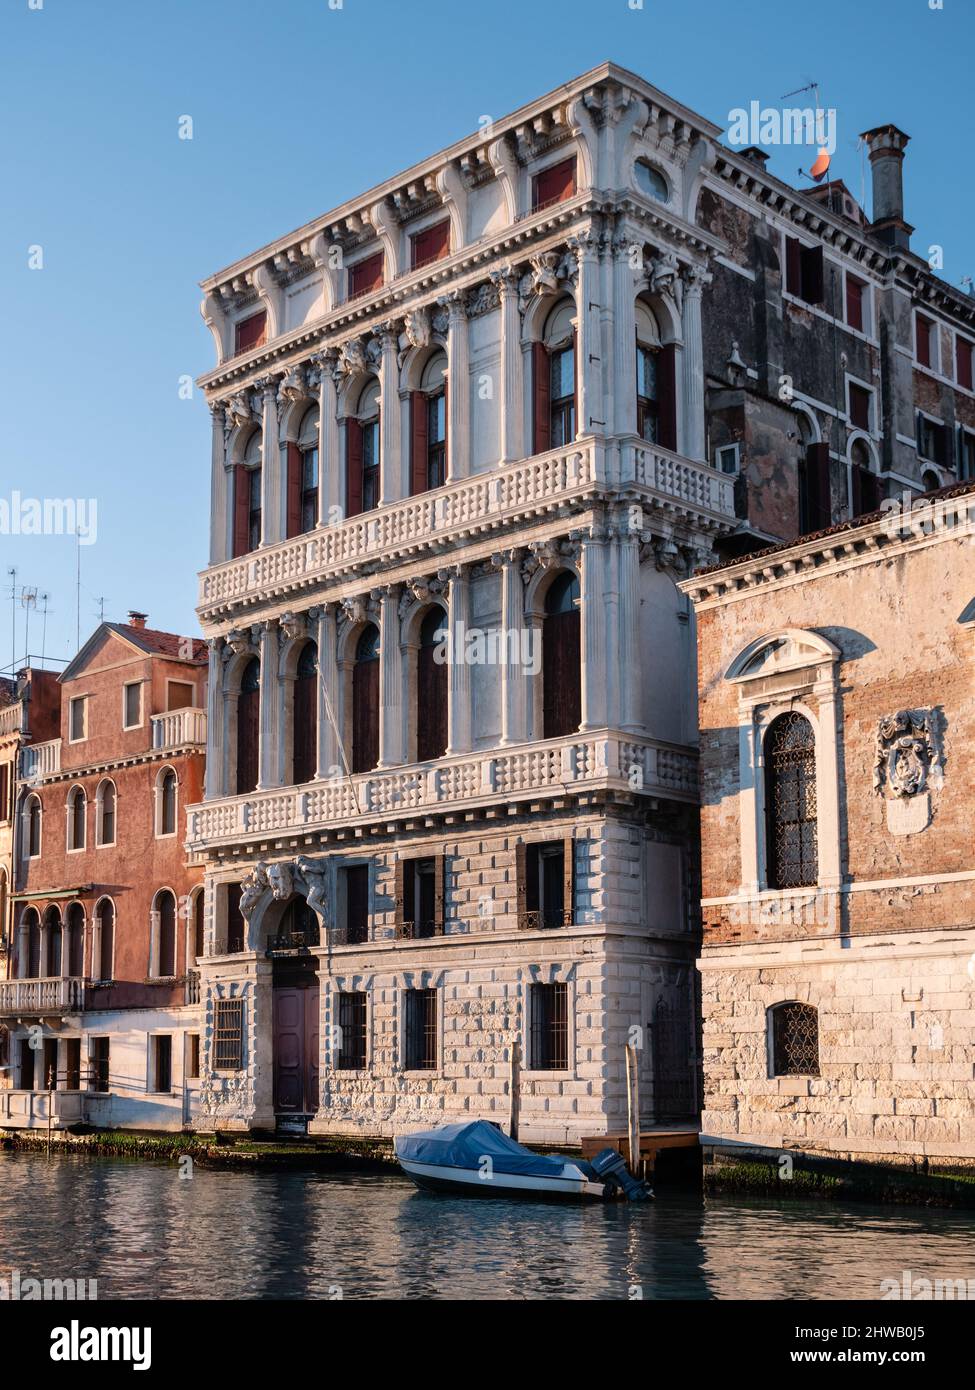 Palazzo Flangini Barockpalast am Canale Grande von Venedig, Italien am Abend Stockfoto